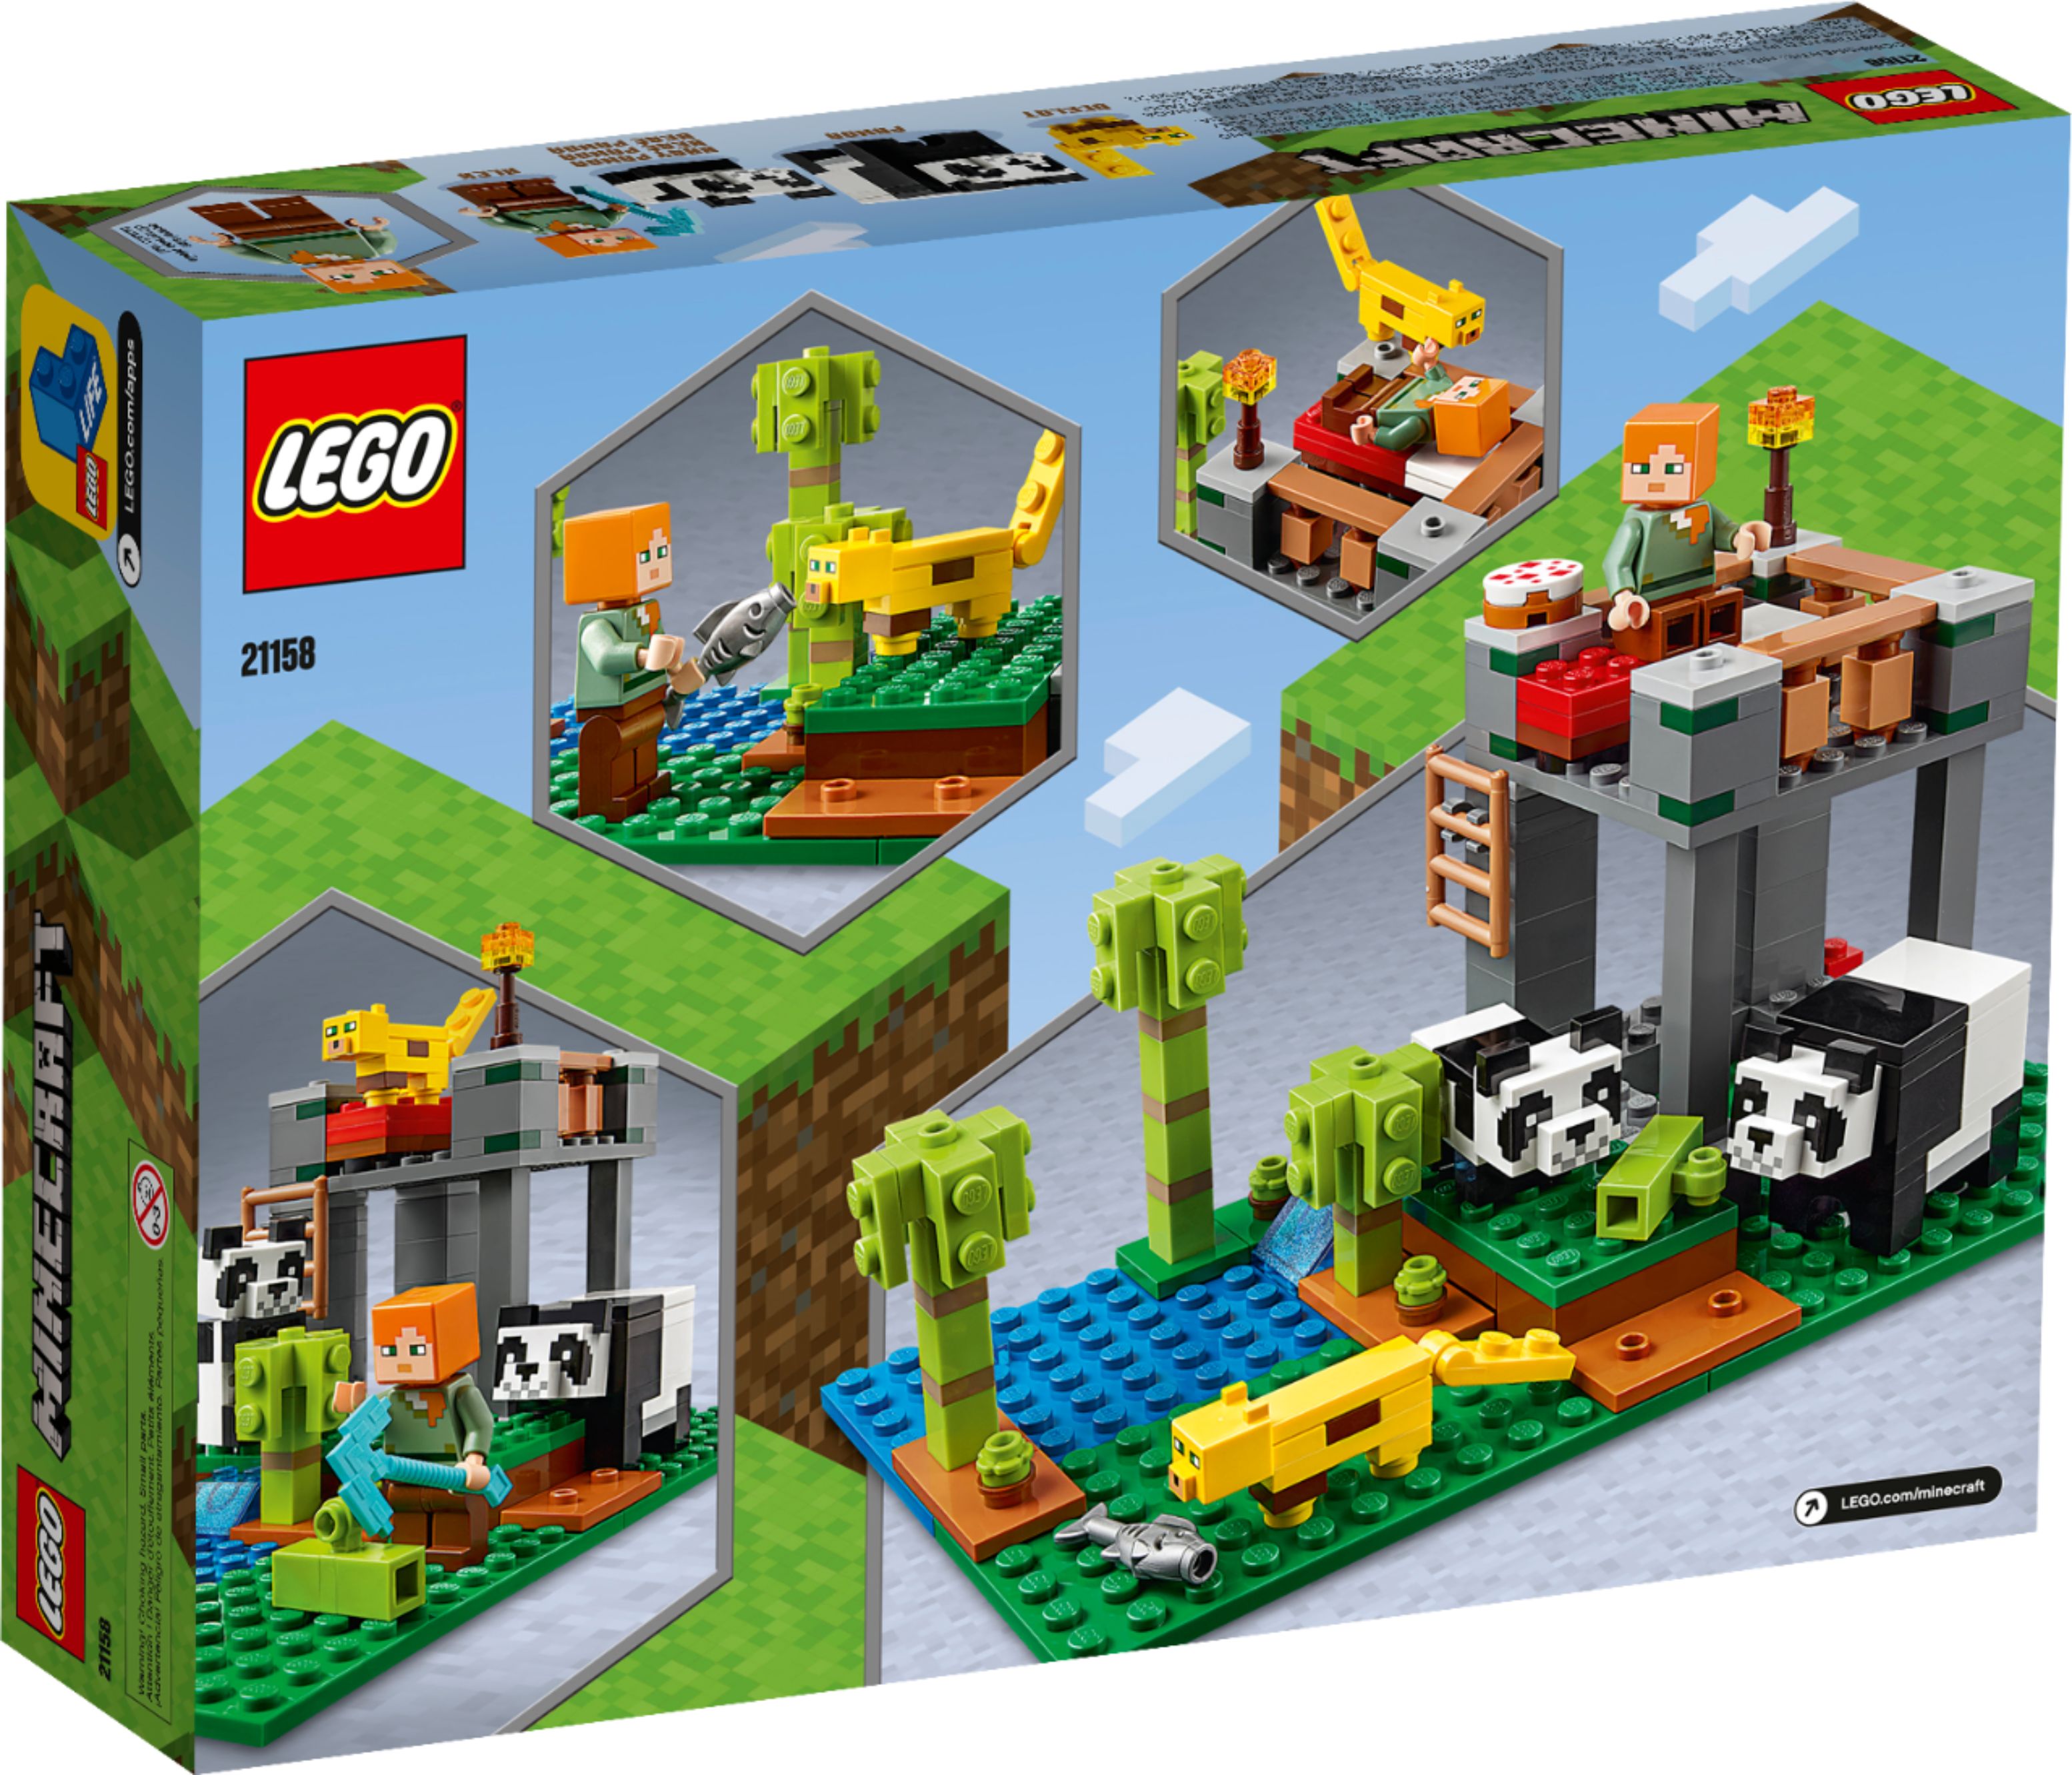 LEGO Minecraft The Red Barn 21187 6379578 - Best Buy